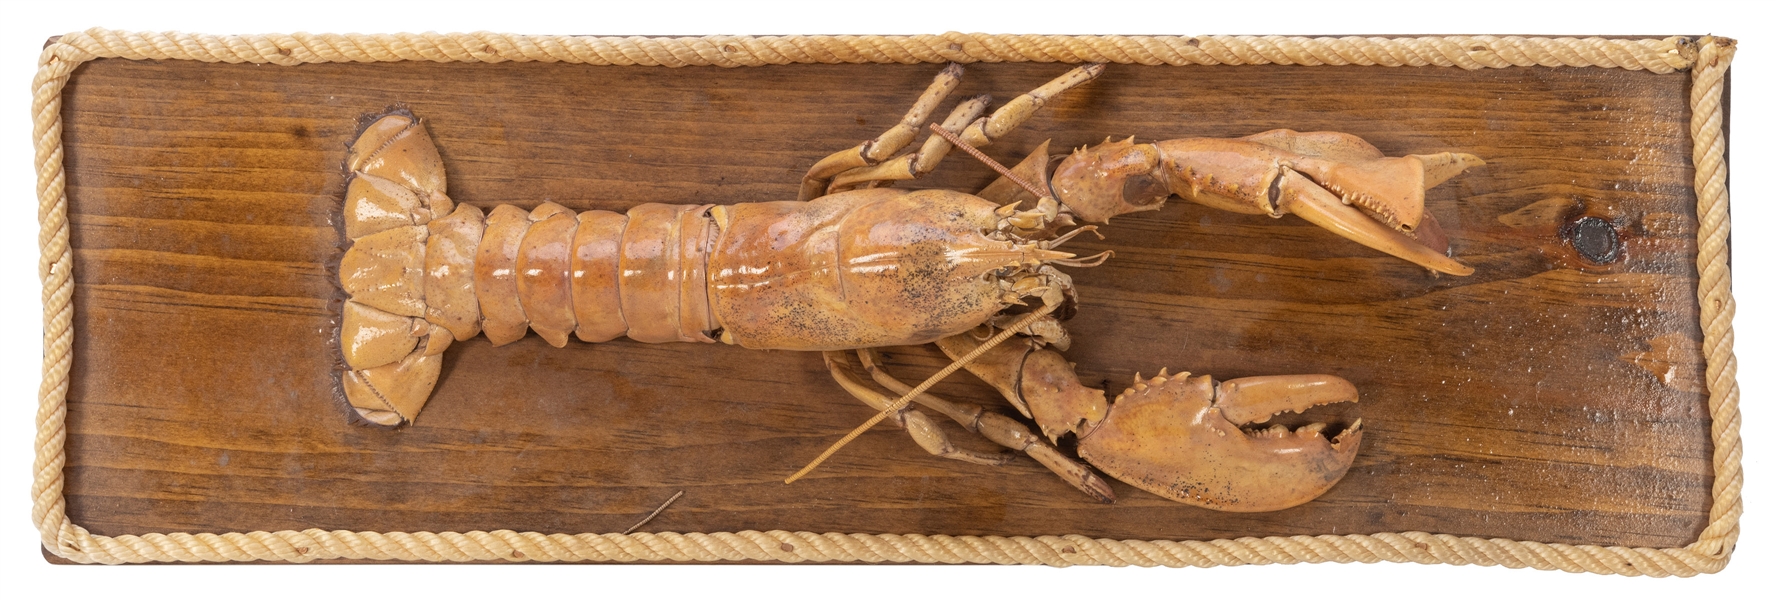  “Freak” Lobster Taxidermy. With deformed claw. Mounted on w...